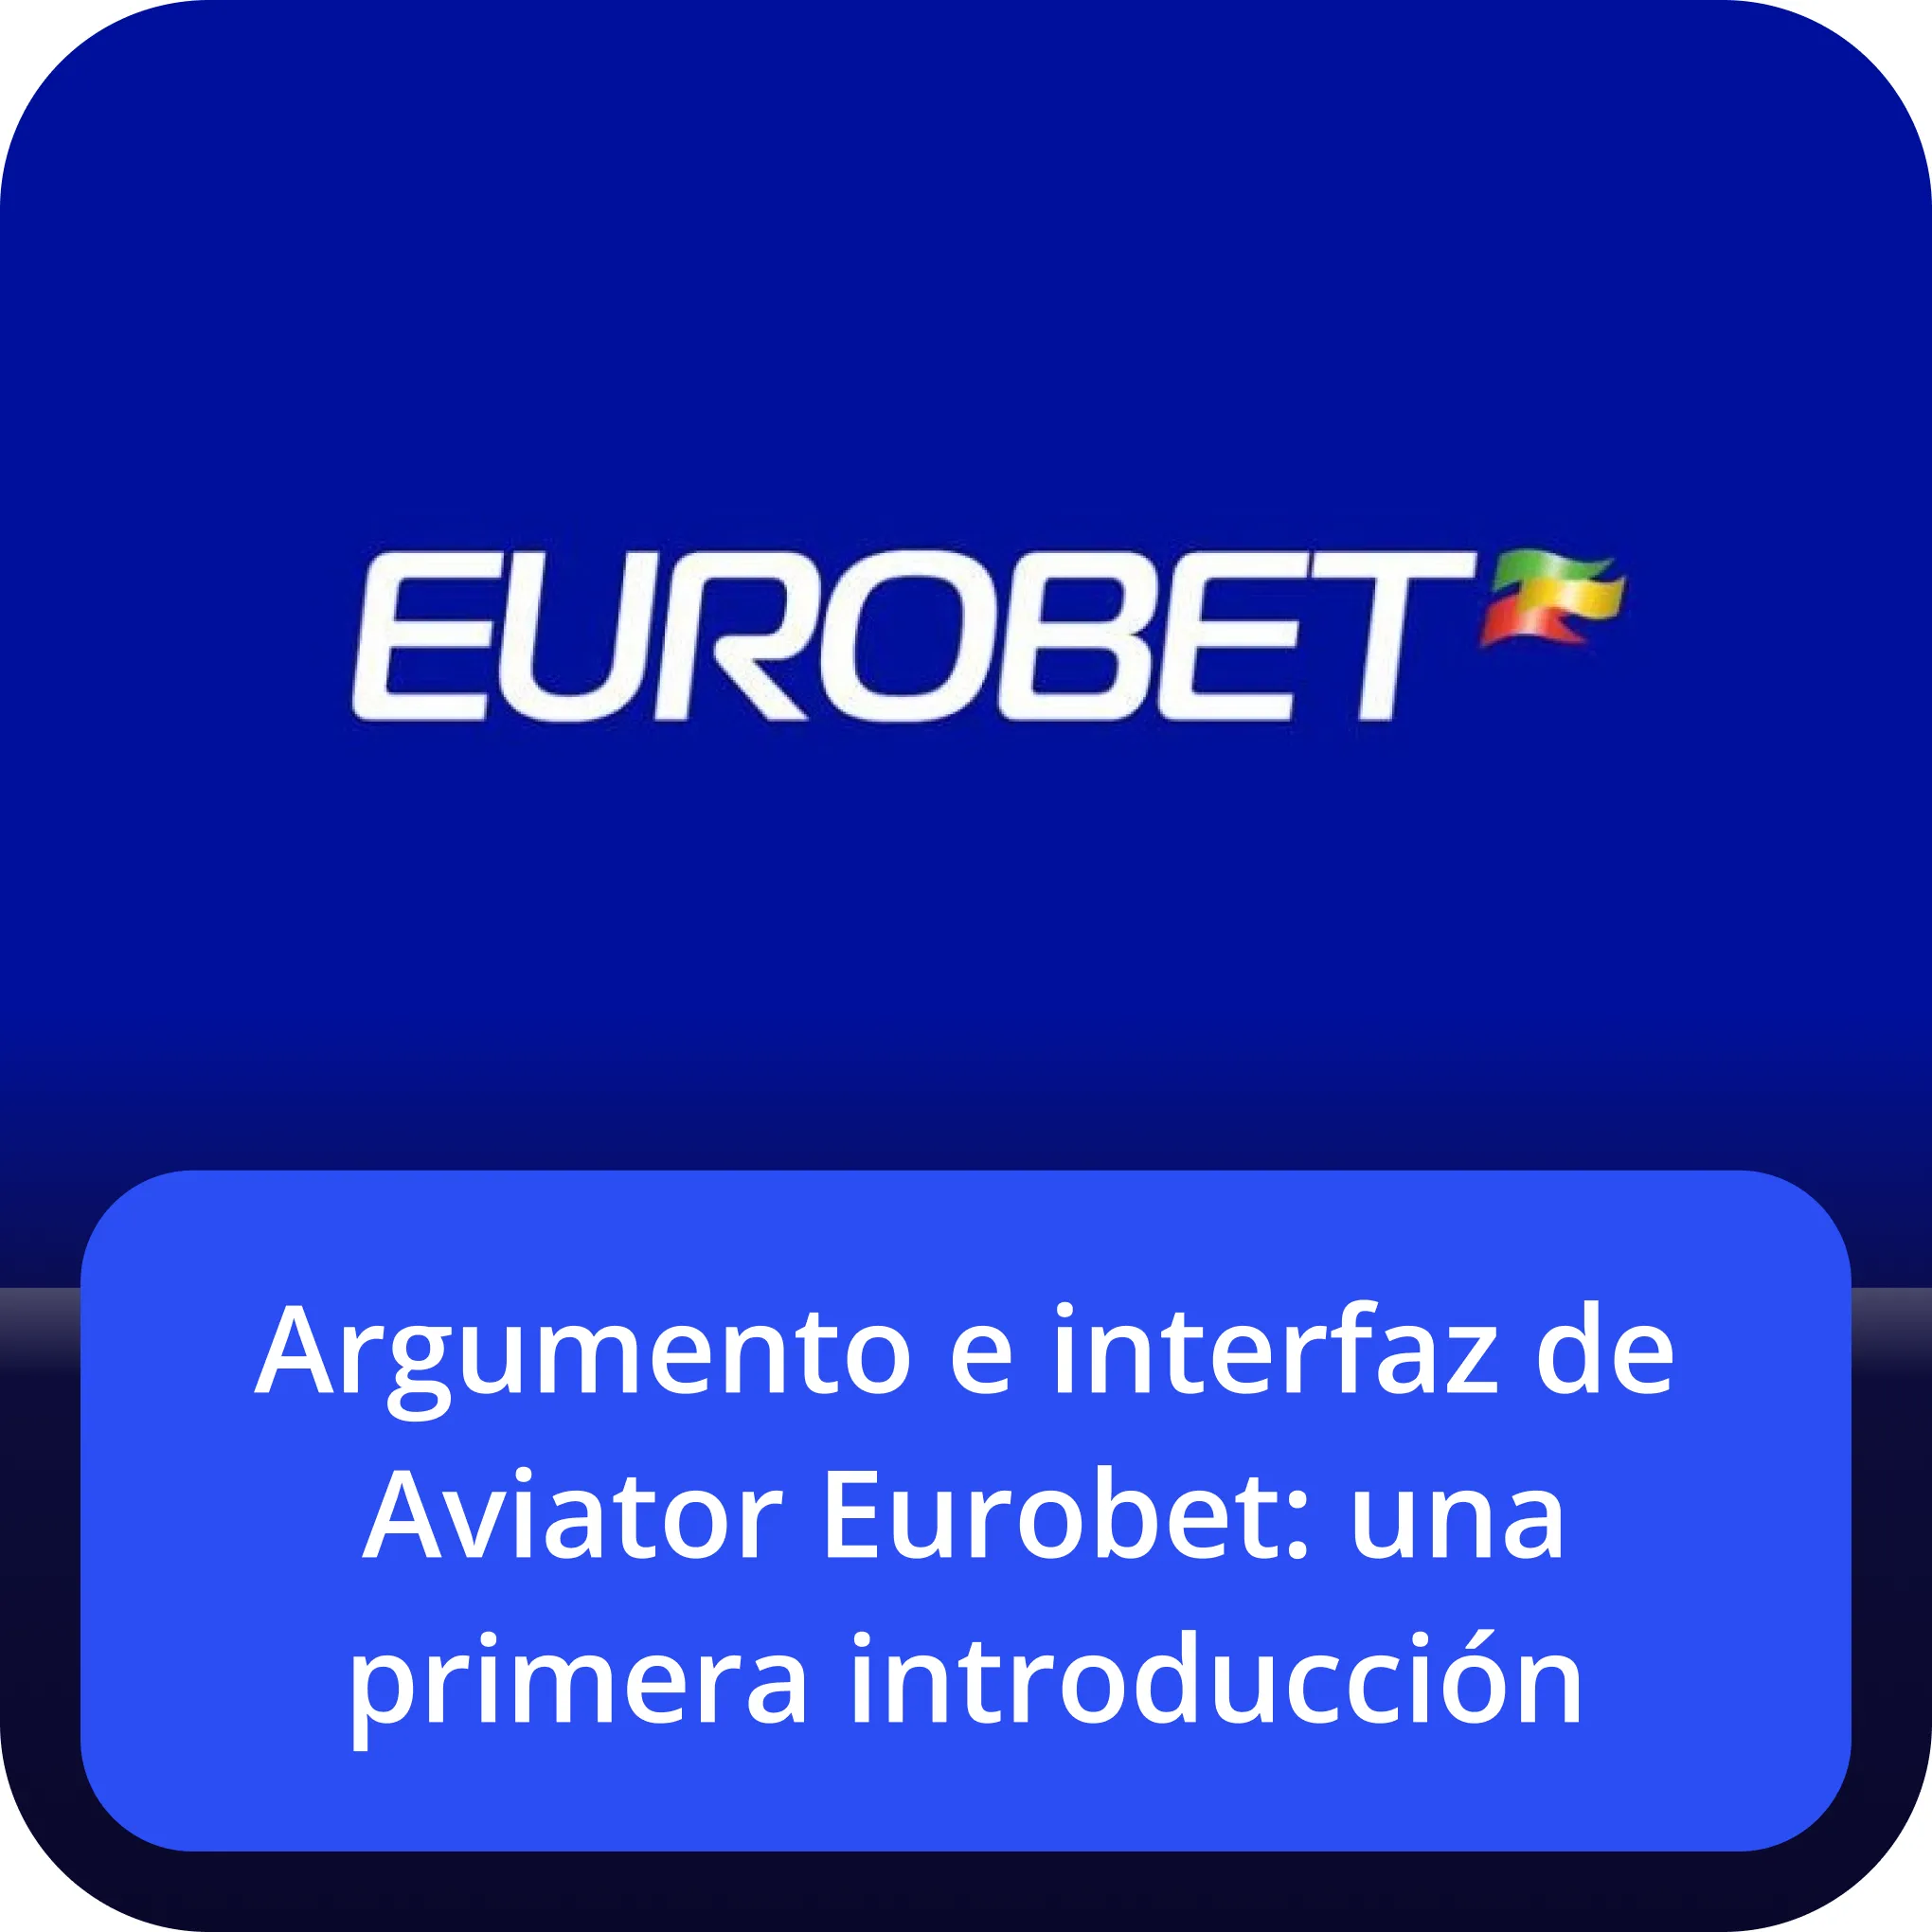 eurobet aviator argumento